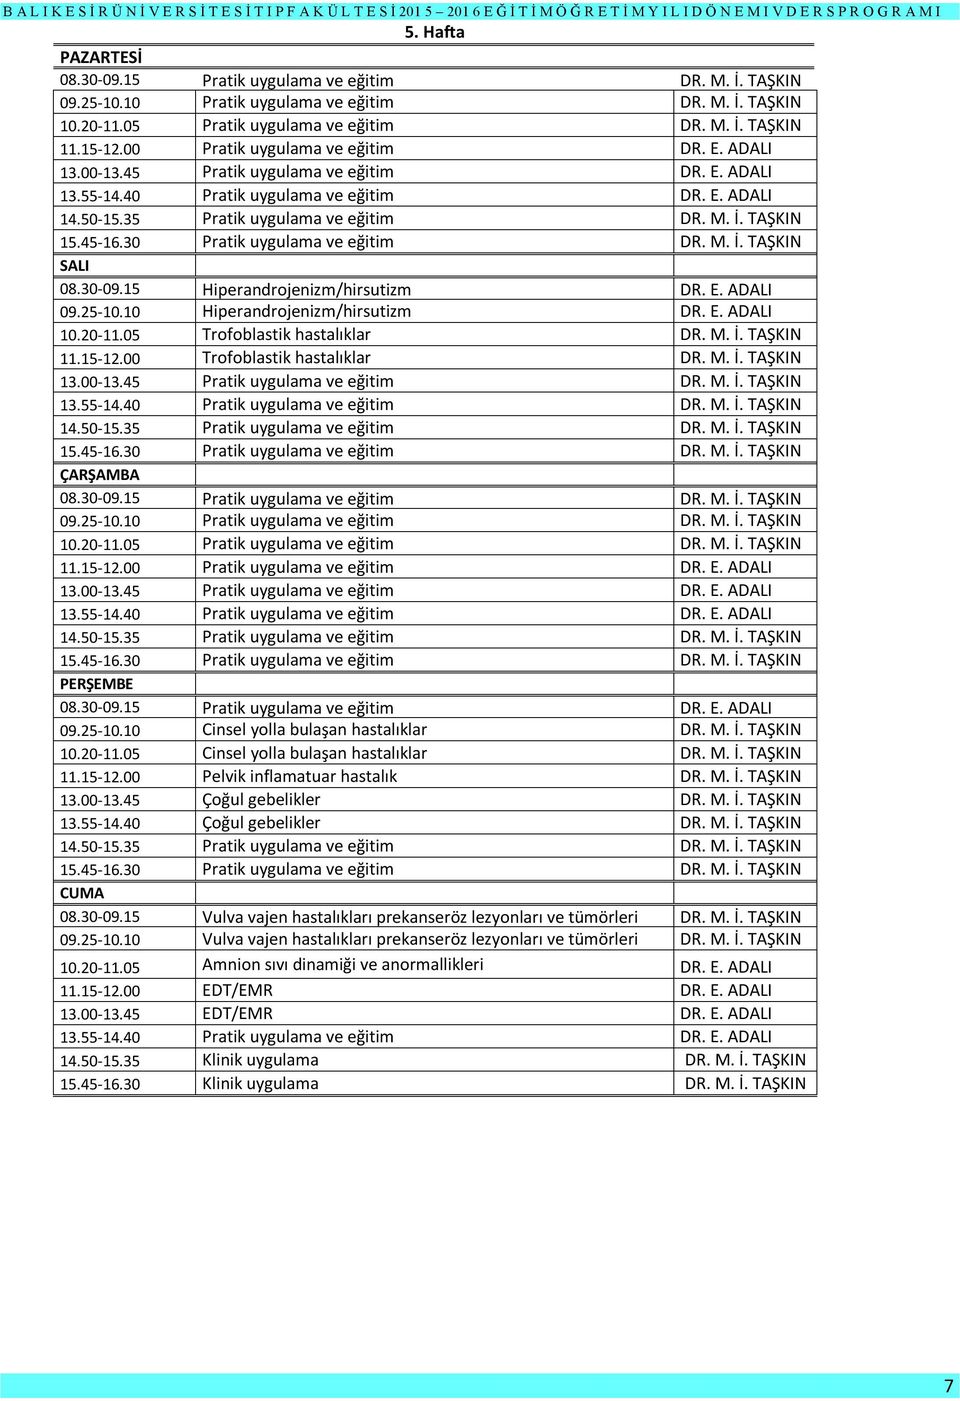 TAŞKIN 15.45-16.30 Pratik uygulama ve eğitim DR. M. İ. TAŞKIN 08.30-09.15 Hiperandrojenizm/hirsutizm DR. E. ADALI 09.25-10.10 Hiperandrojenizm/hirsutizm DR. E. ADALI 10.20-11.